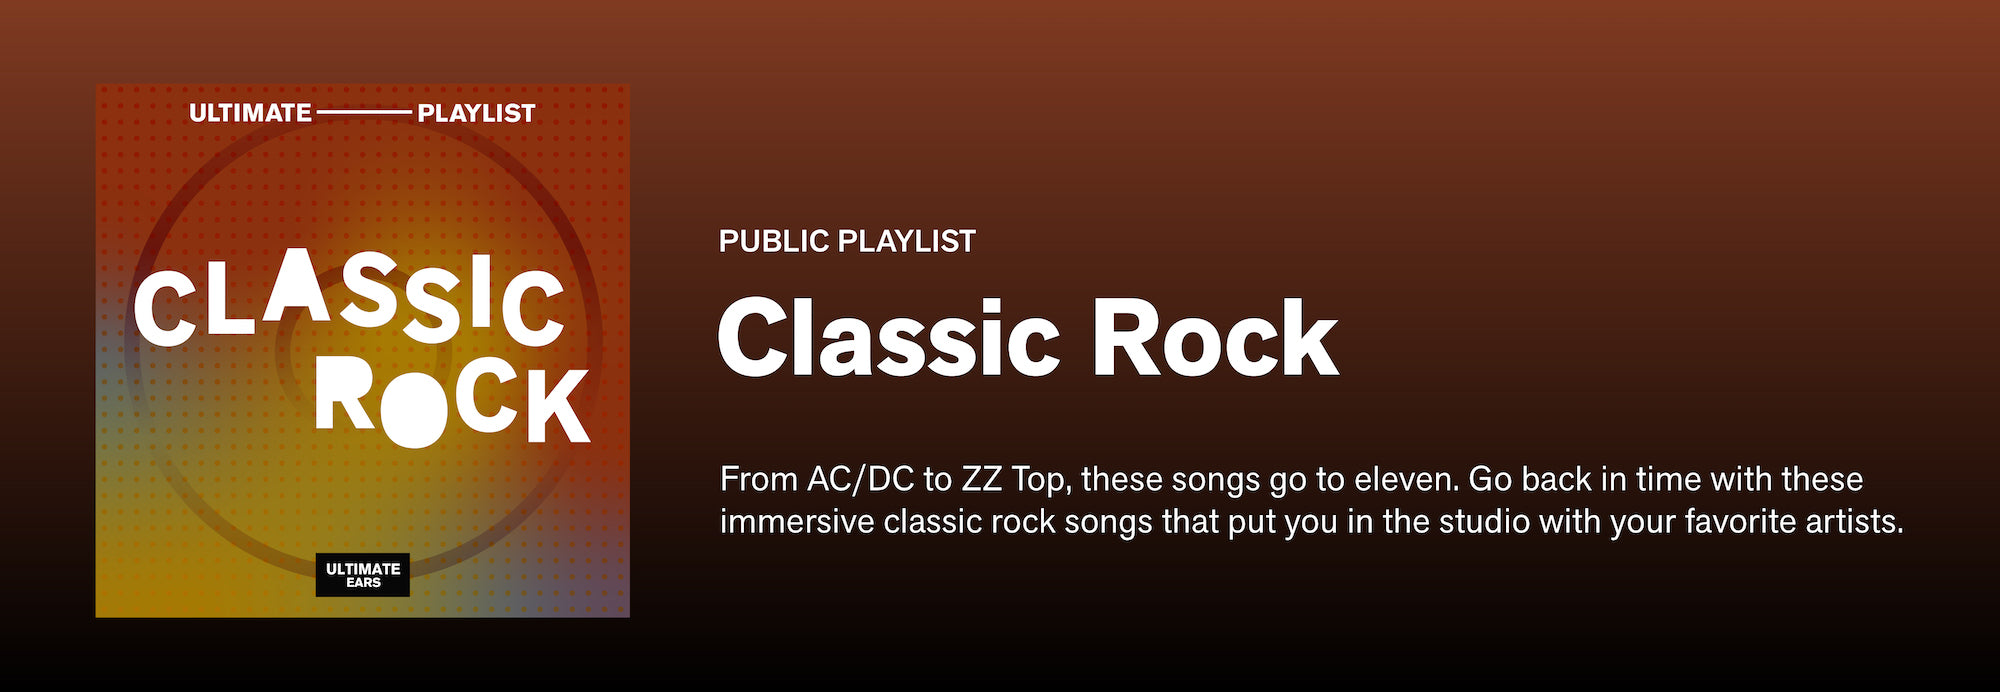 Immersive Classic Rock – Ultimate Ears